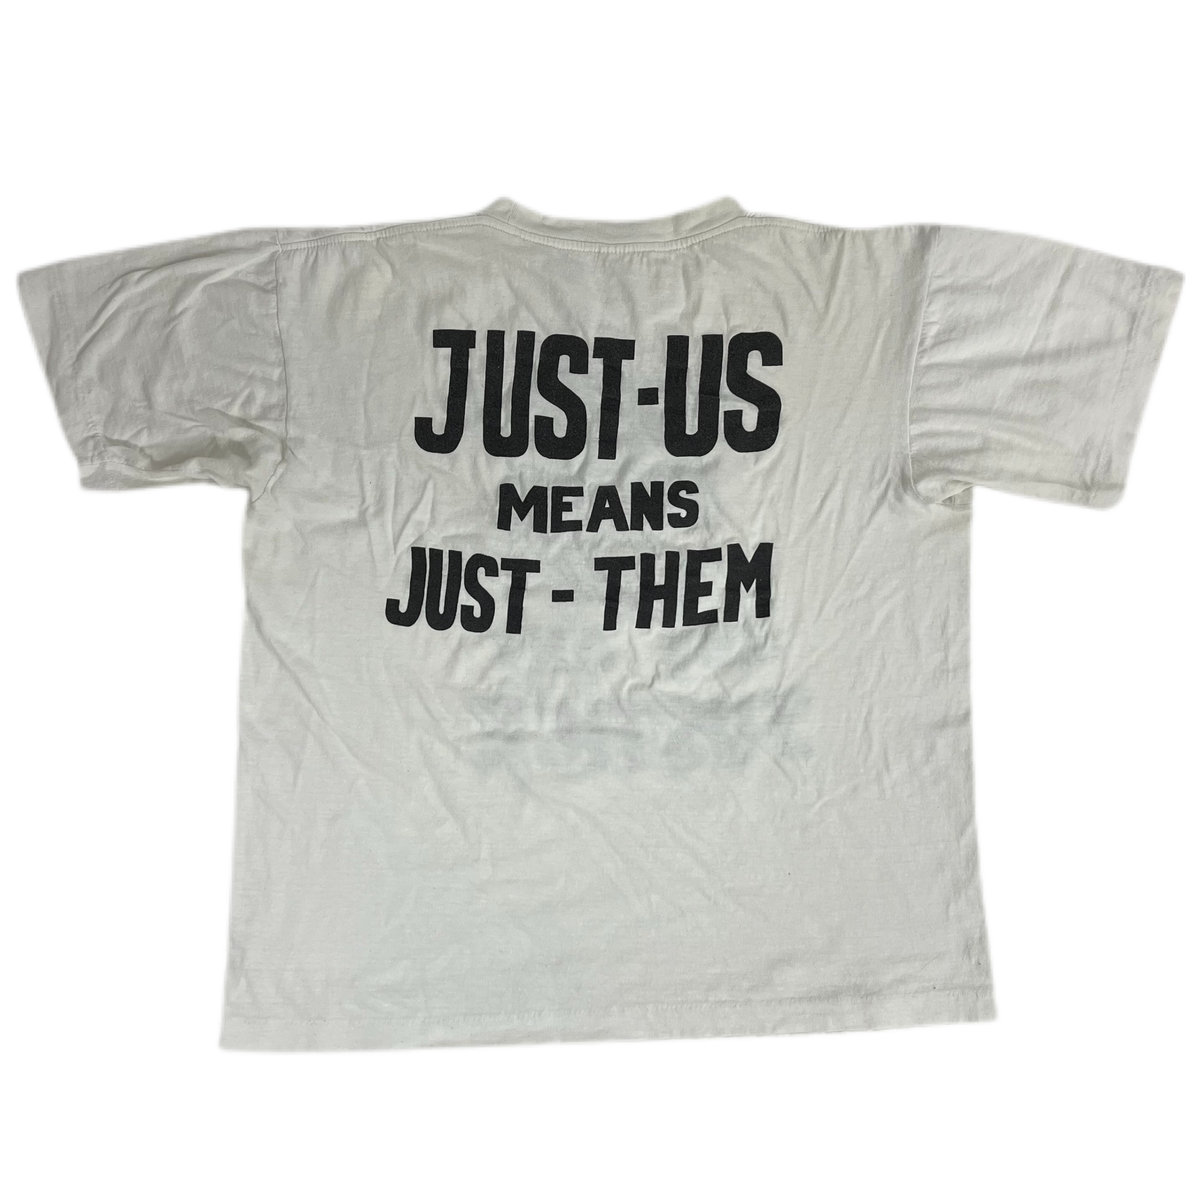 Vintage Rodney King &quot;No Justice&quot; L.A. Riots T-Shirt